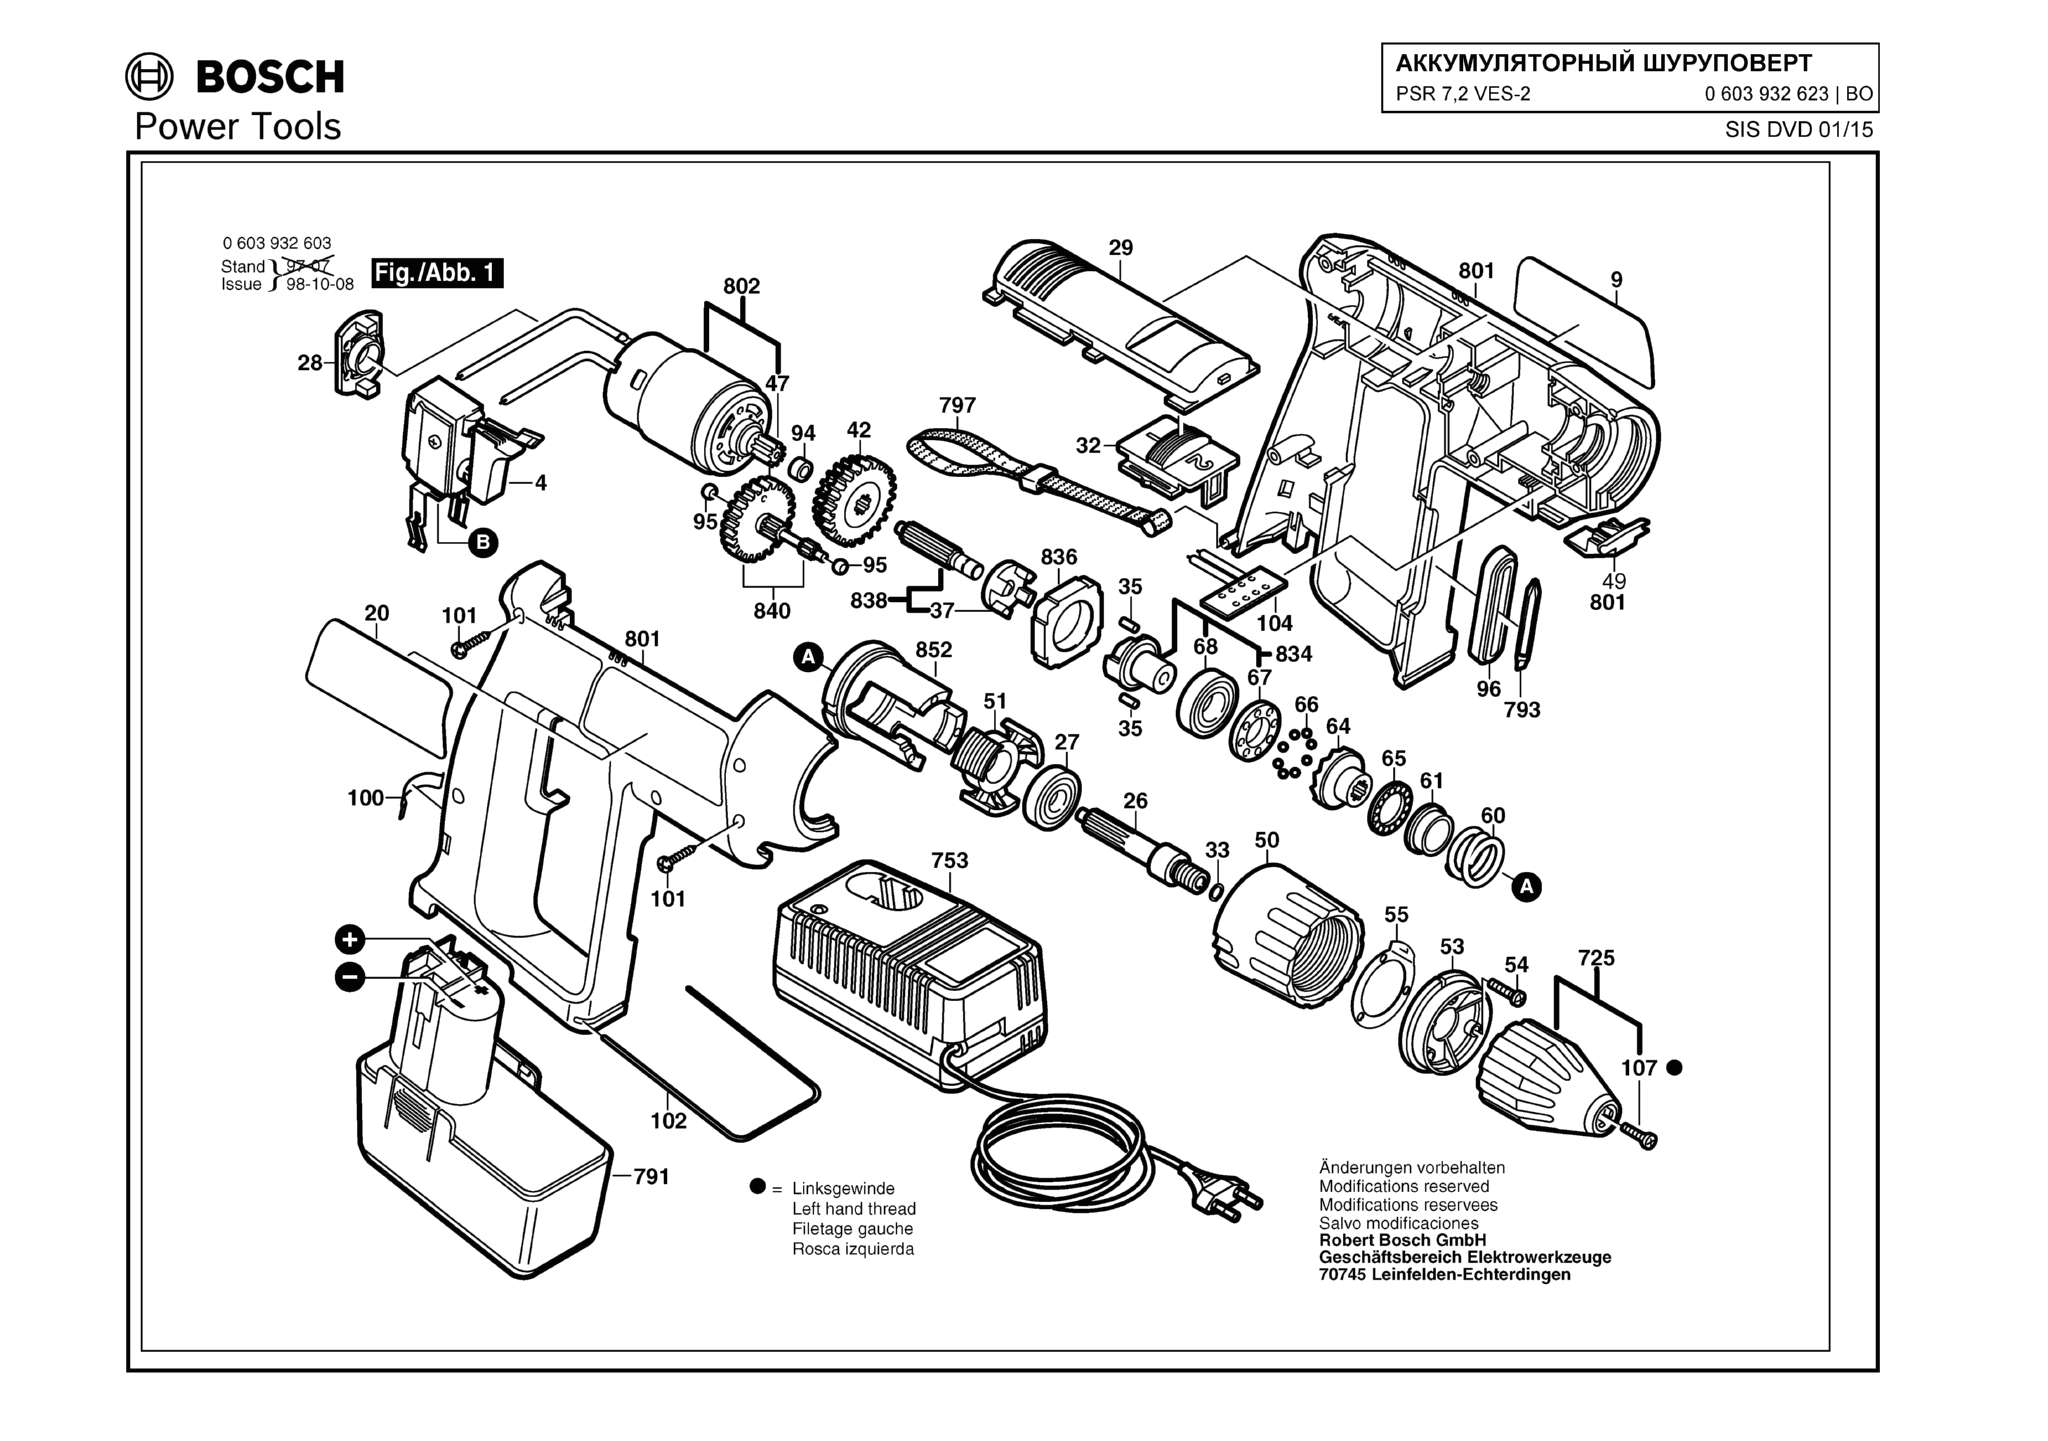 Запчасти, схема и деталировка Bosch PSR 7,2 VES-2 (ТИП 0603932623)